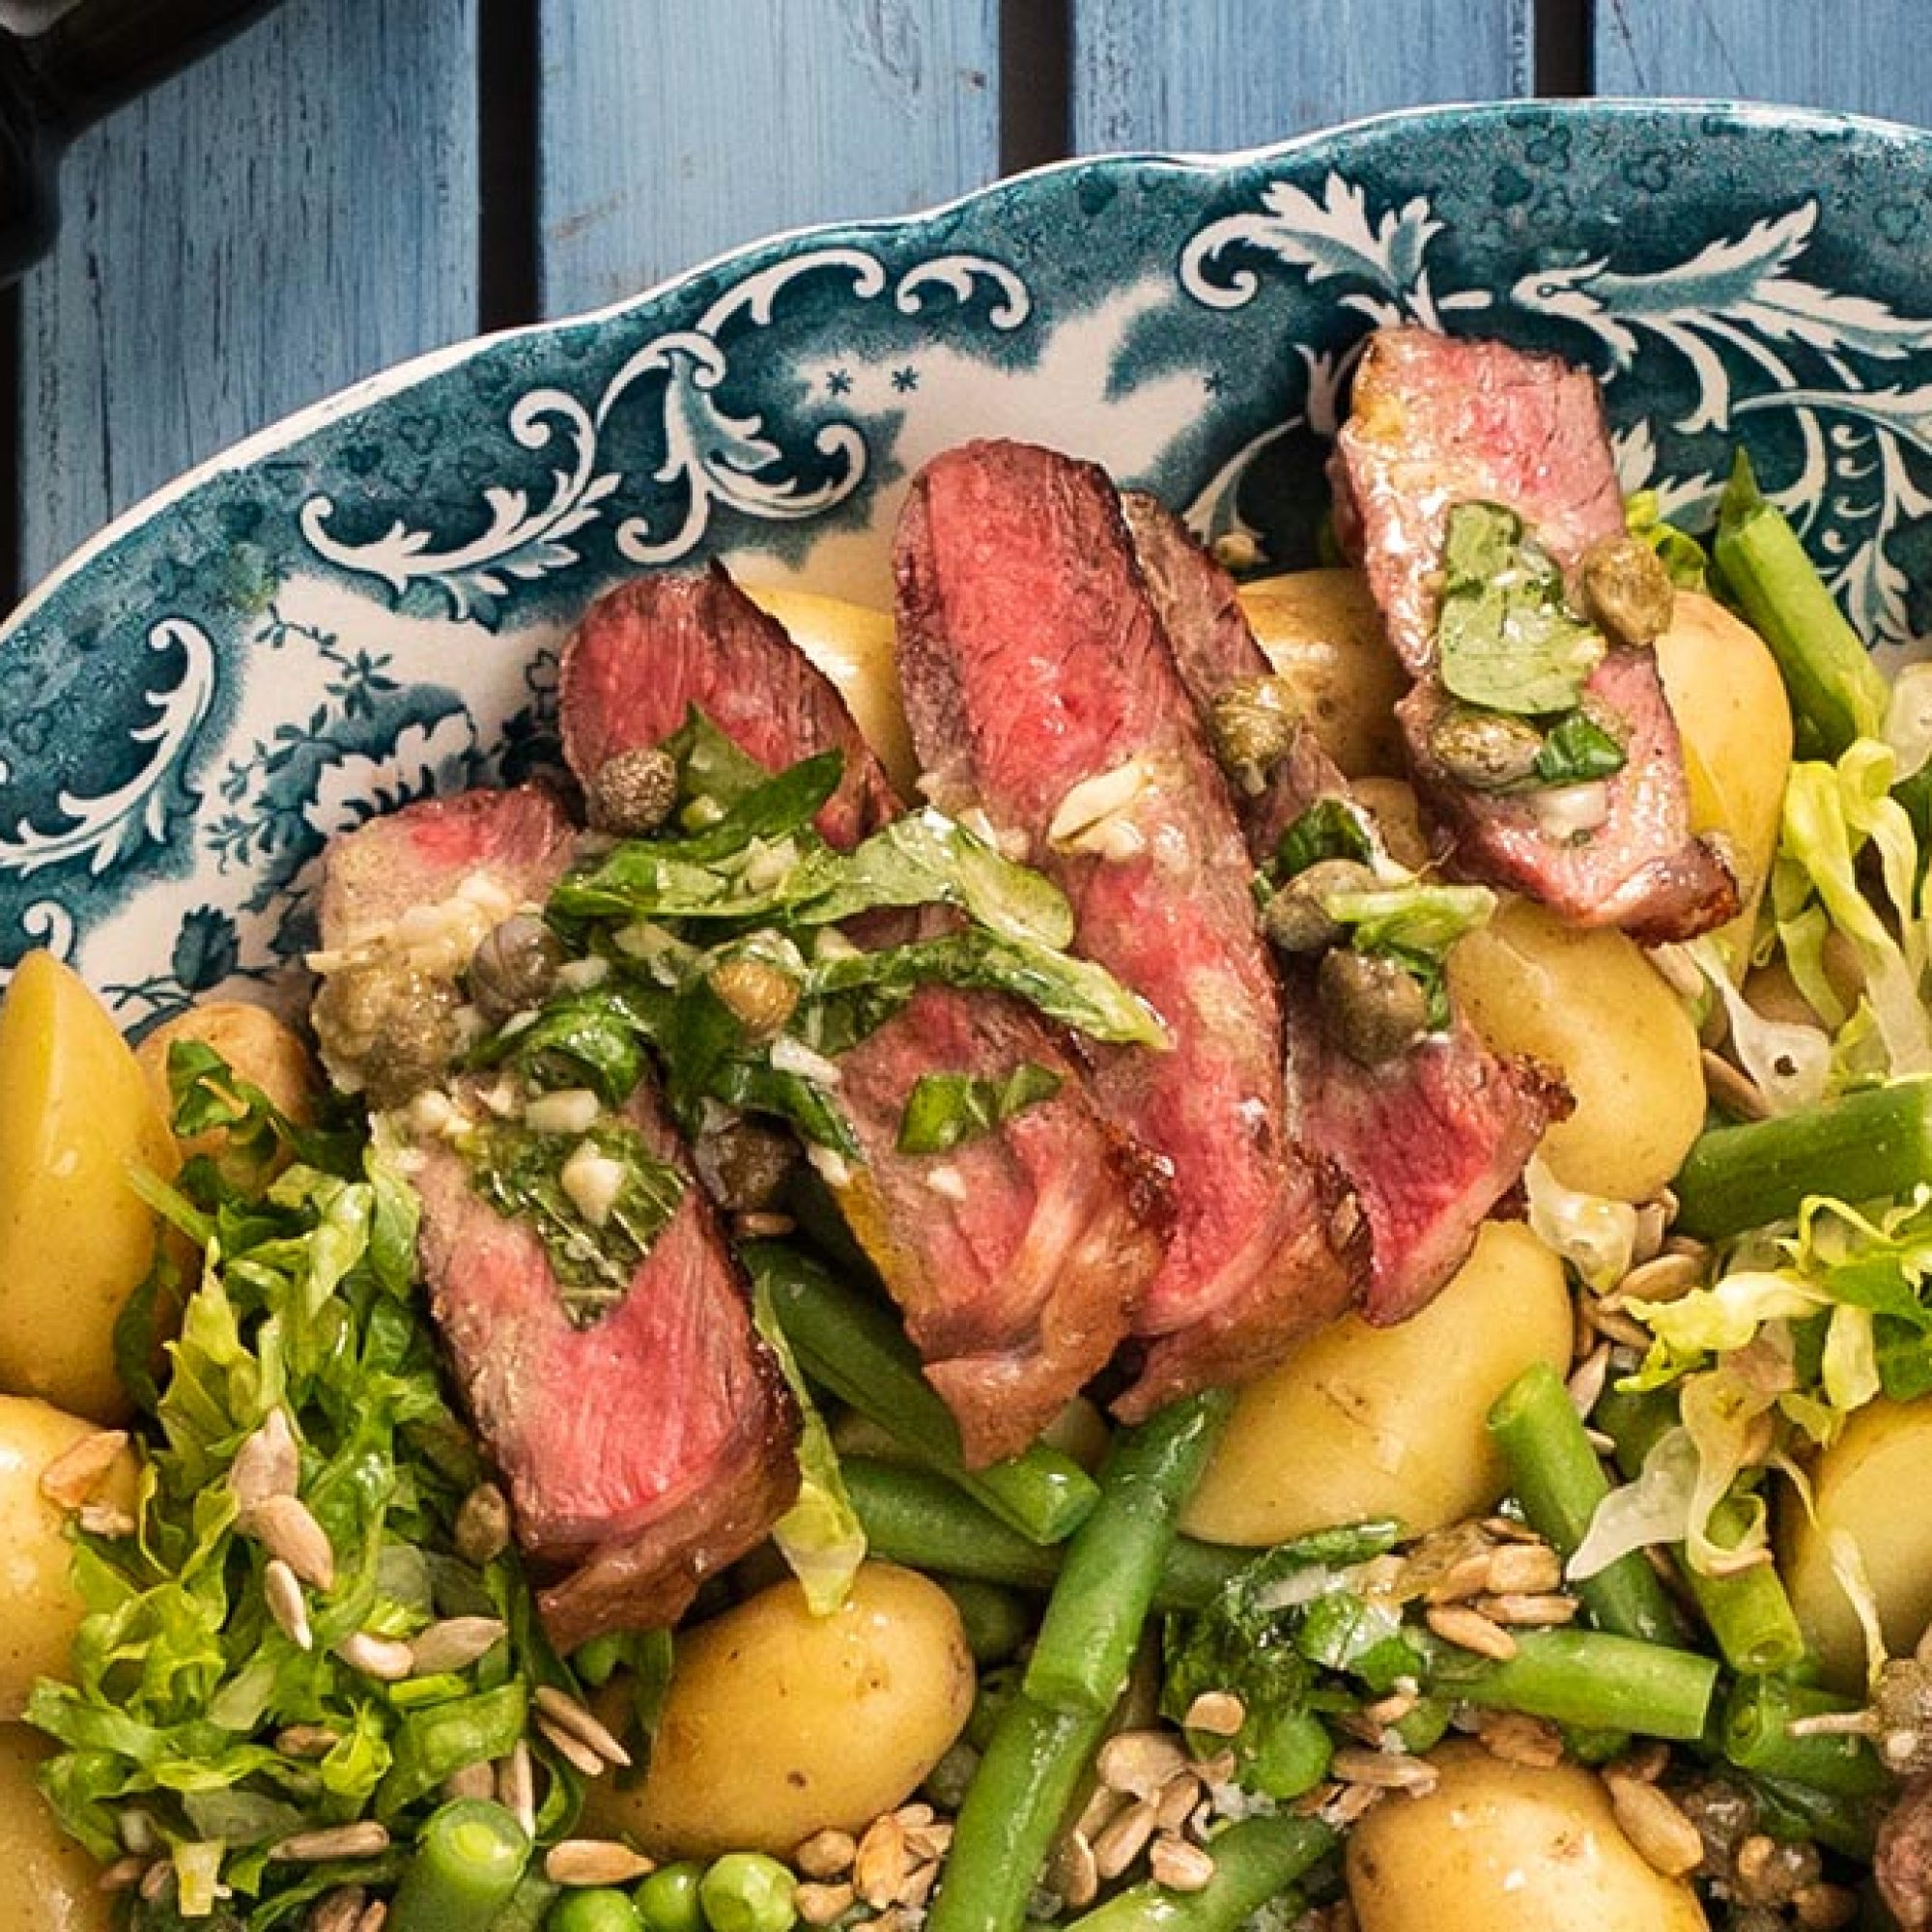 Seared Beef & Potato Salad with Basic & Mint Dressing Recipe